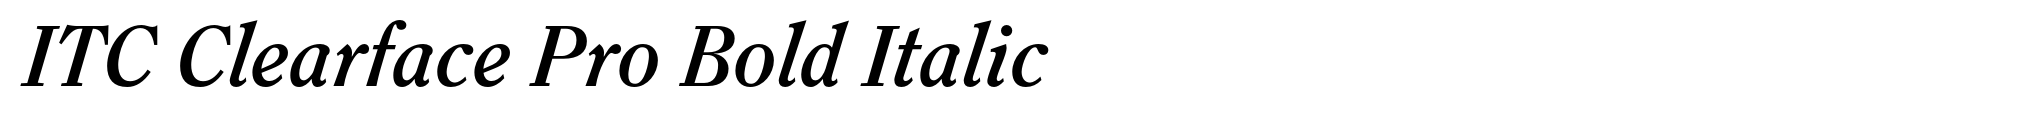 ITC Clearface Pro Bold Italic image